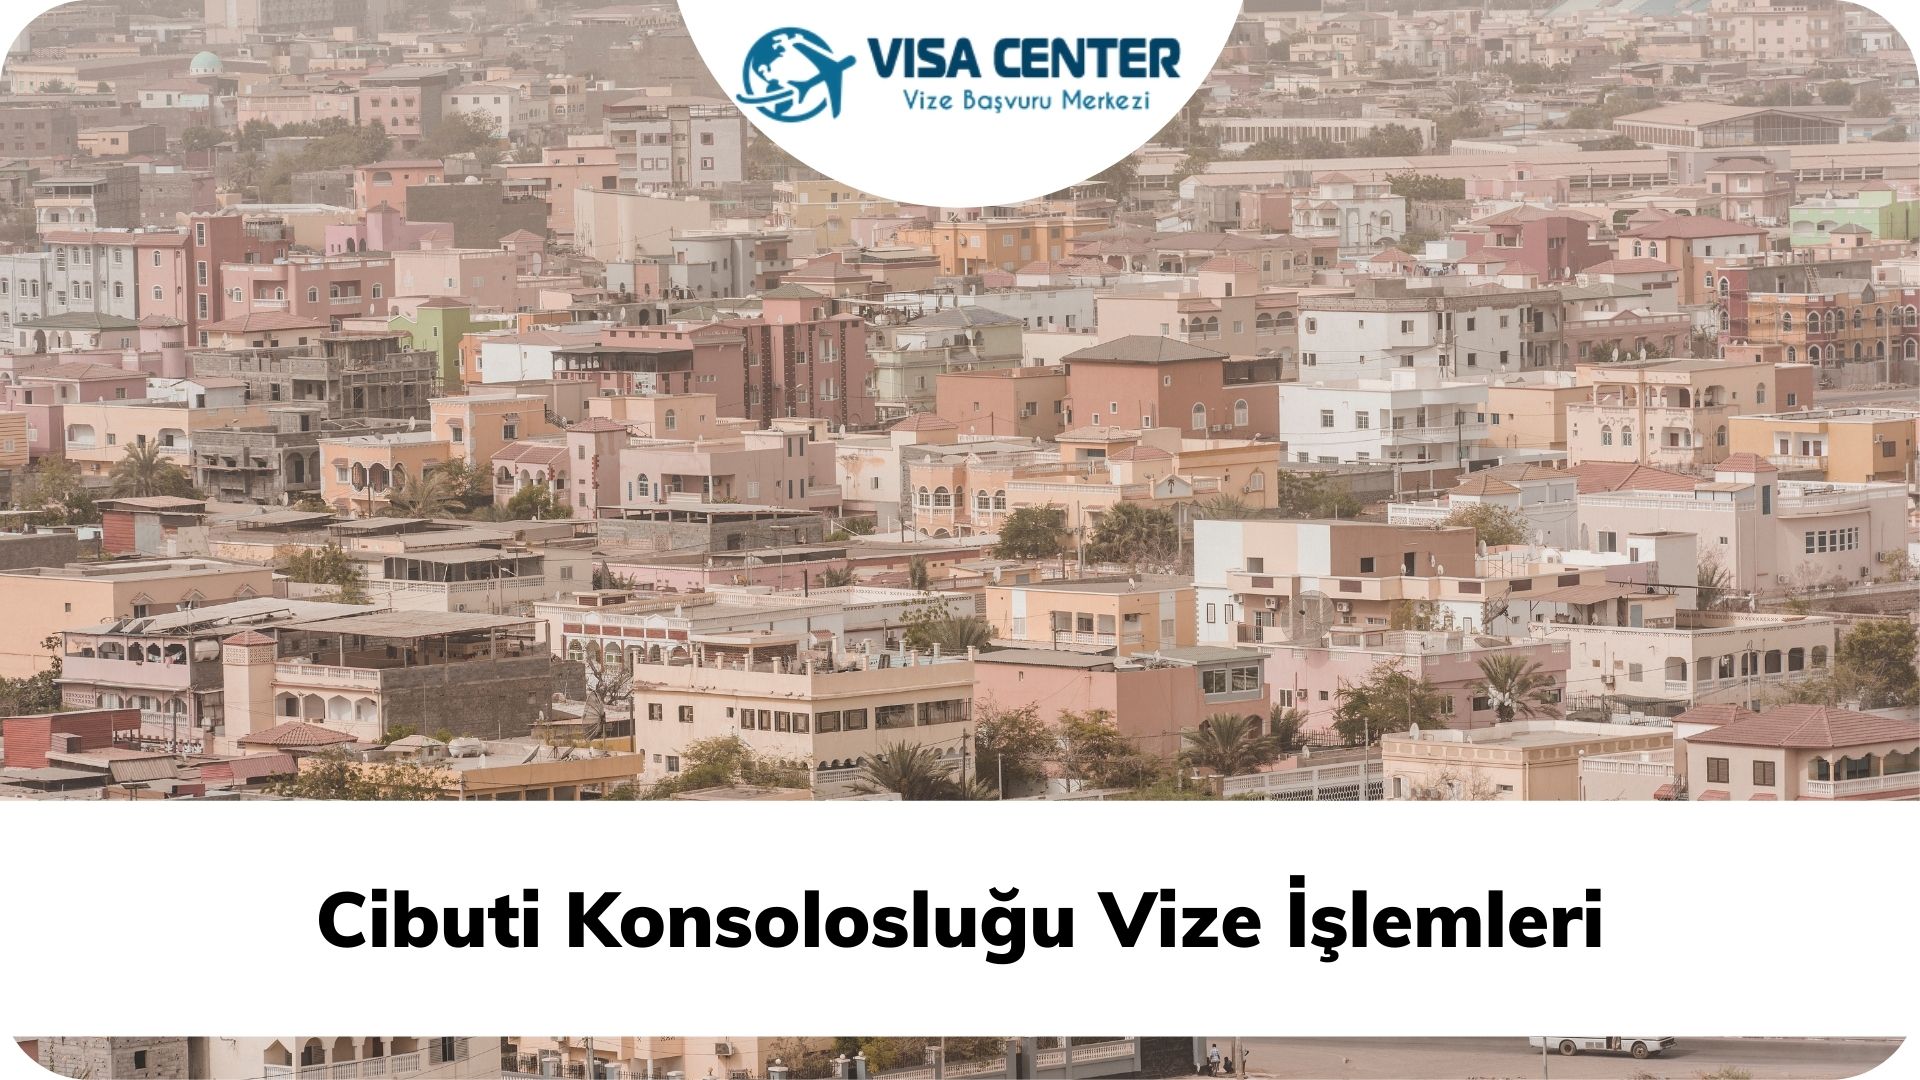 Cibuti Konsolosluğu Vize İşlemleri